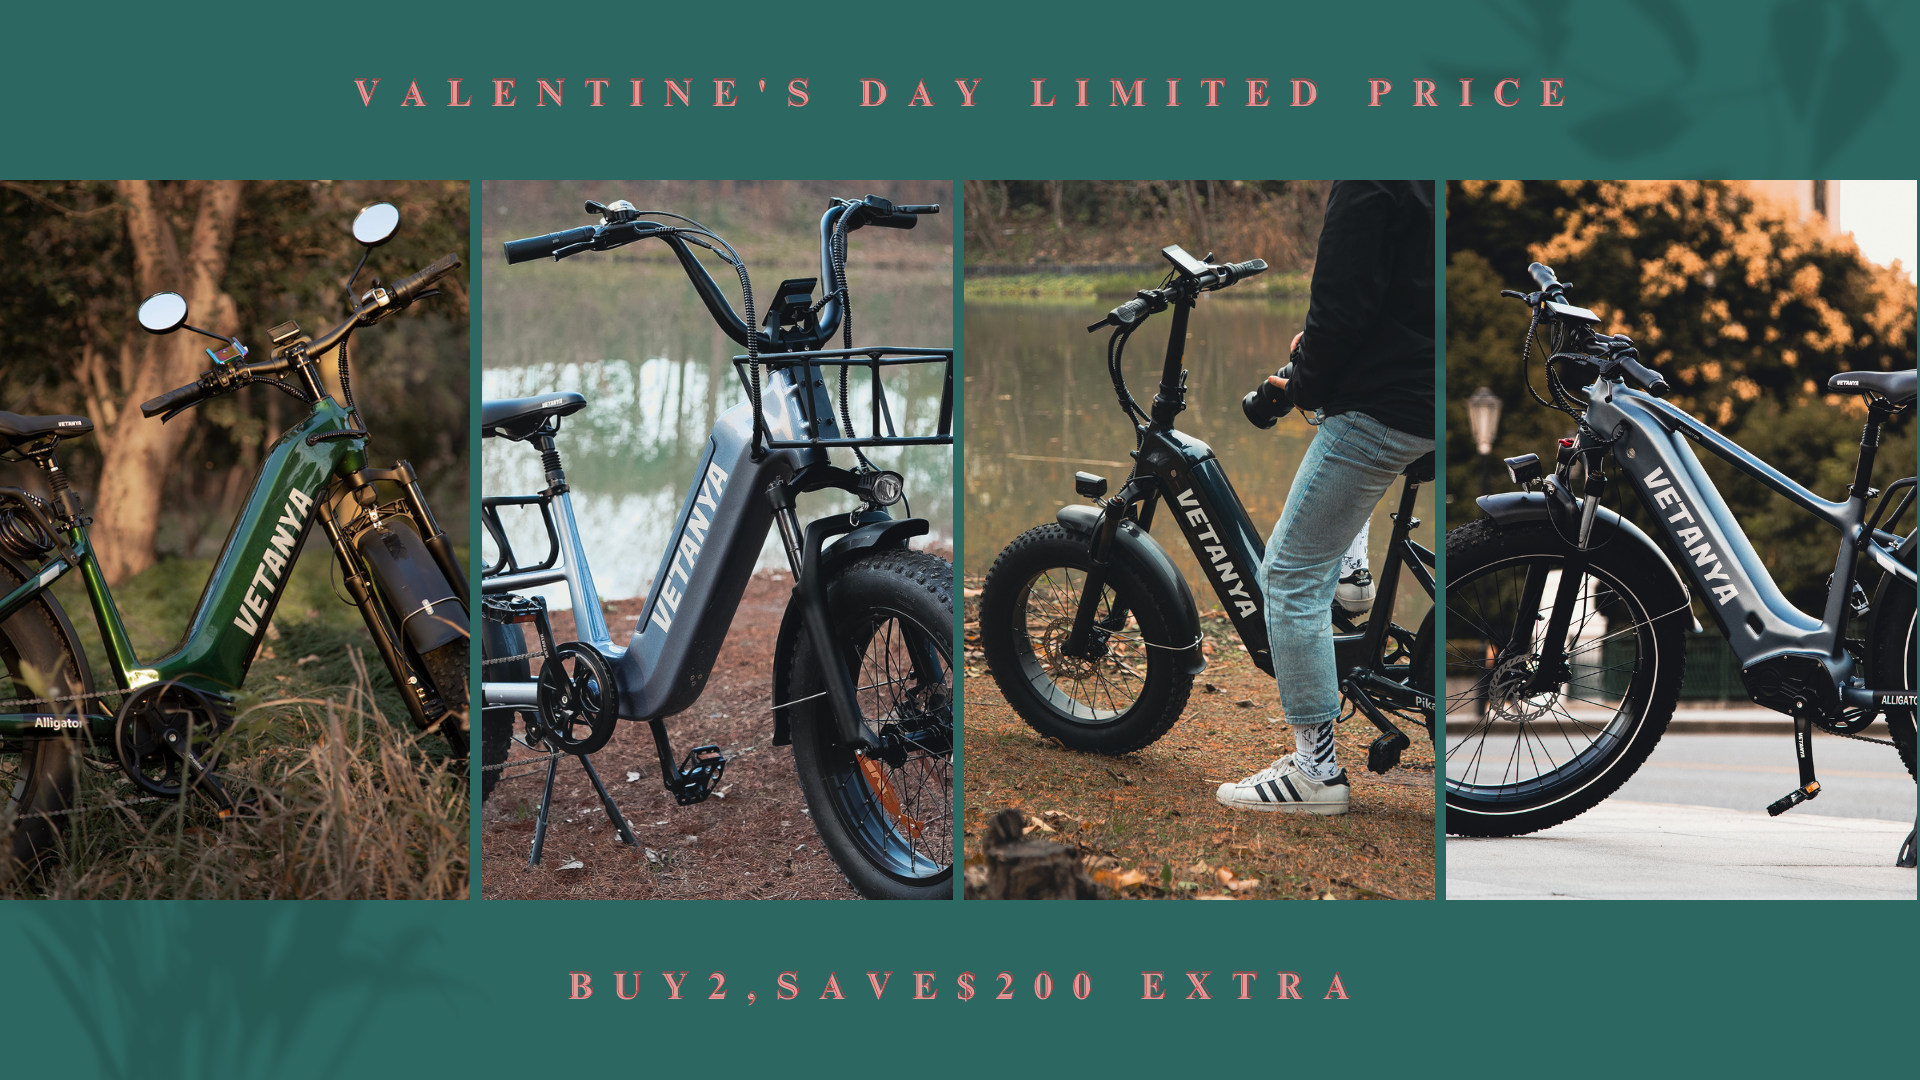 Best Valentine's Day Gift | Vetanya Electric Bikes for Your Valentine's Celebration